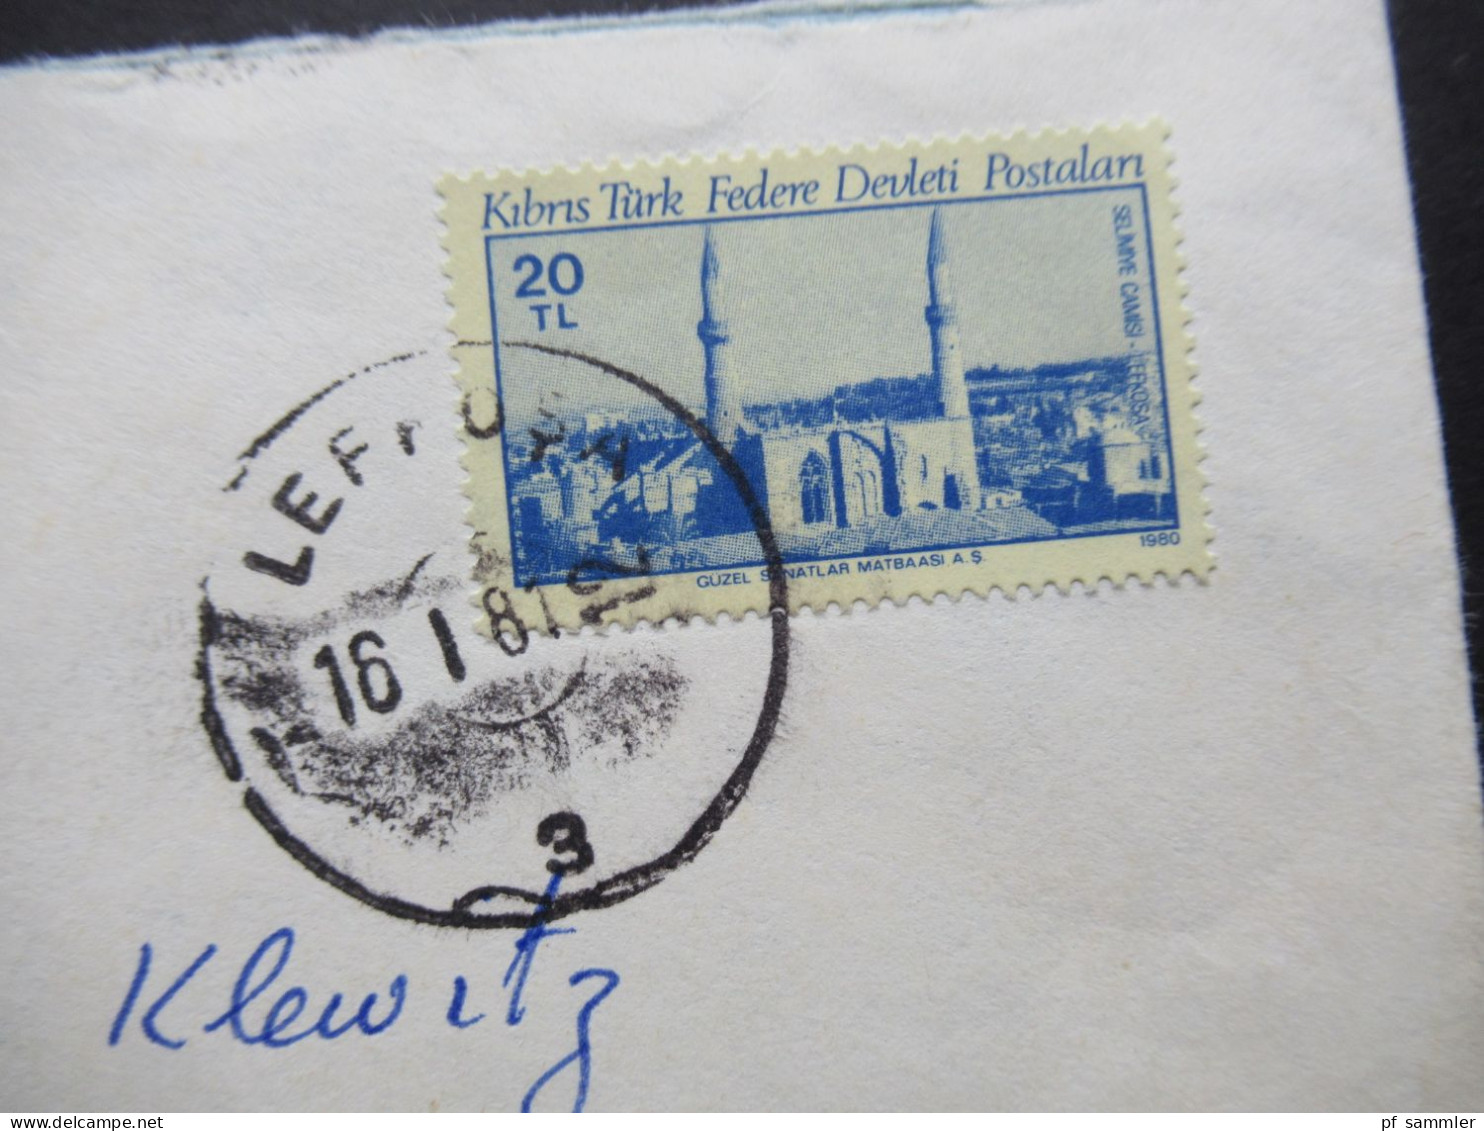 Zypern 1981 Kibris Türk Federe Devleti Postalan Stempel Lefkosa Nach Fulda Gesendet - Lettres & Documents